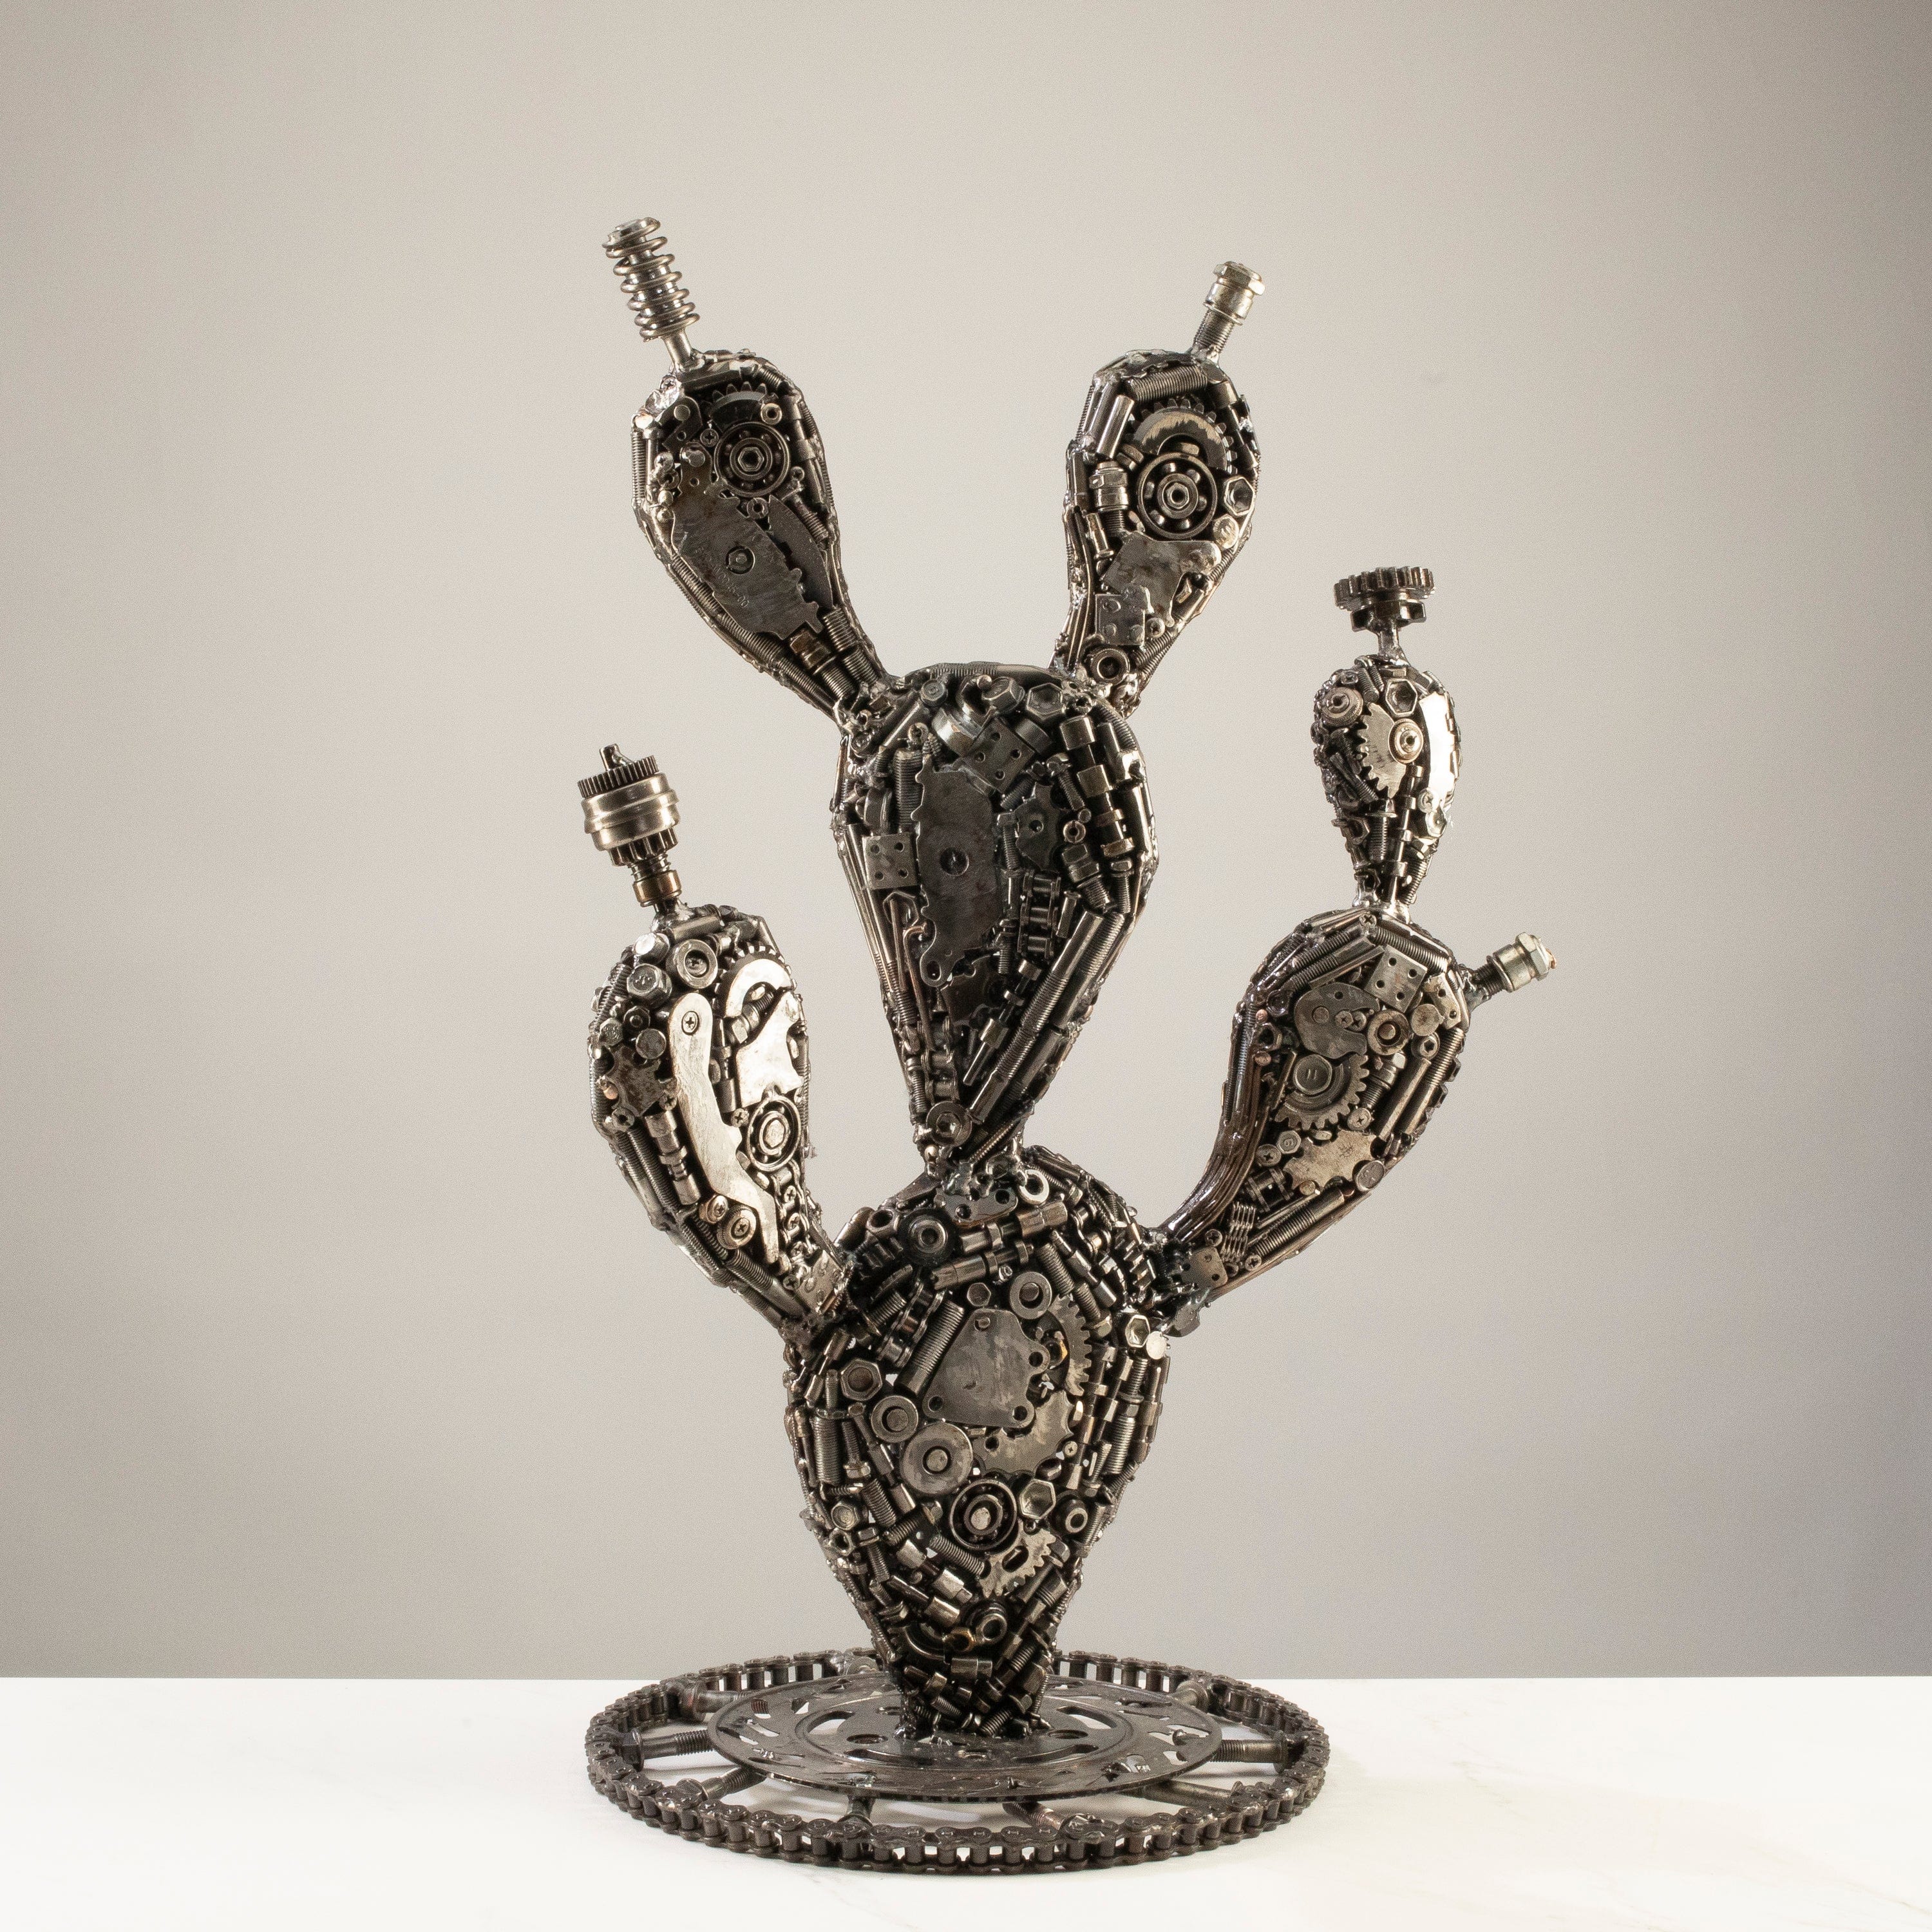 KALIFANO Recycled Metal Art 25" Prickly Cactus Recycled Metal Art Sculpture RMS-PC48x63-PK